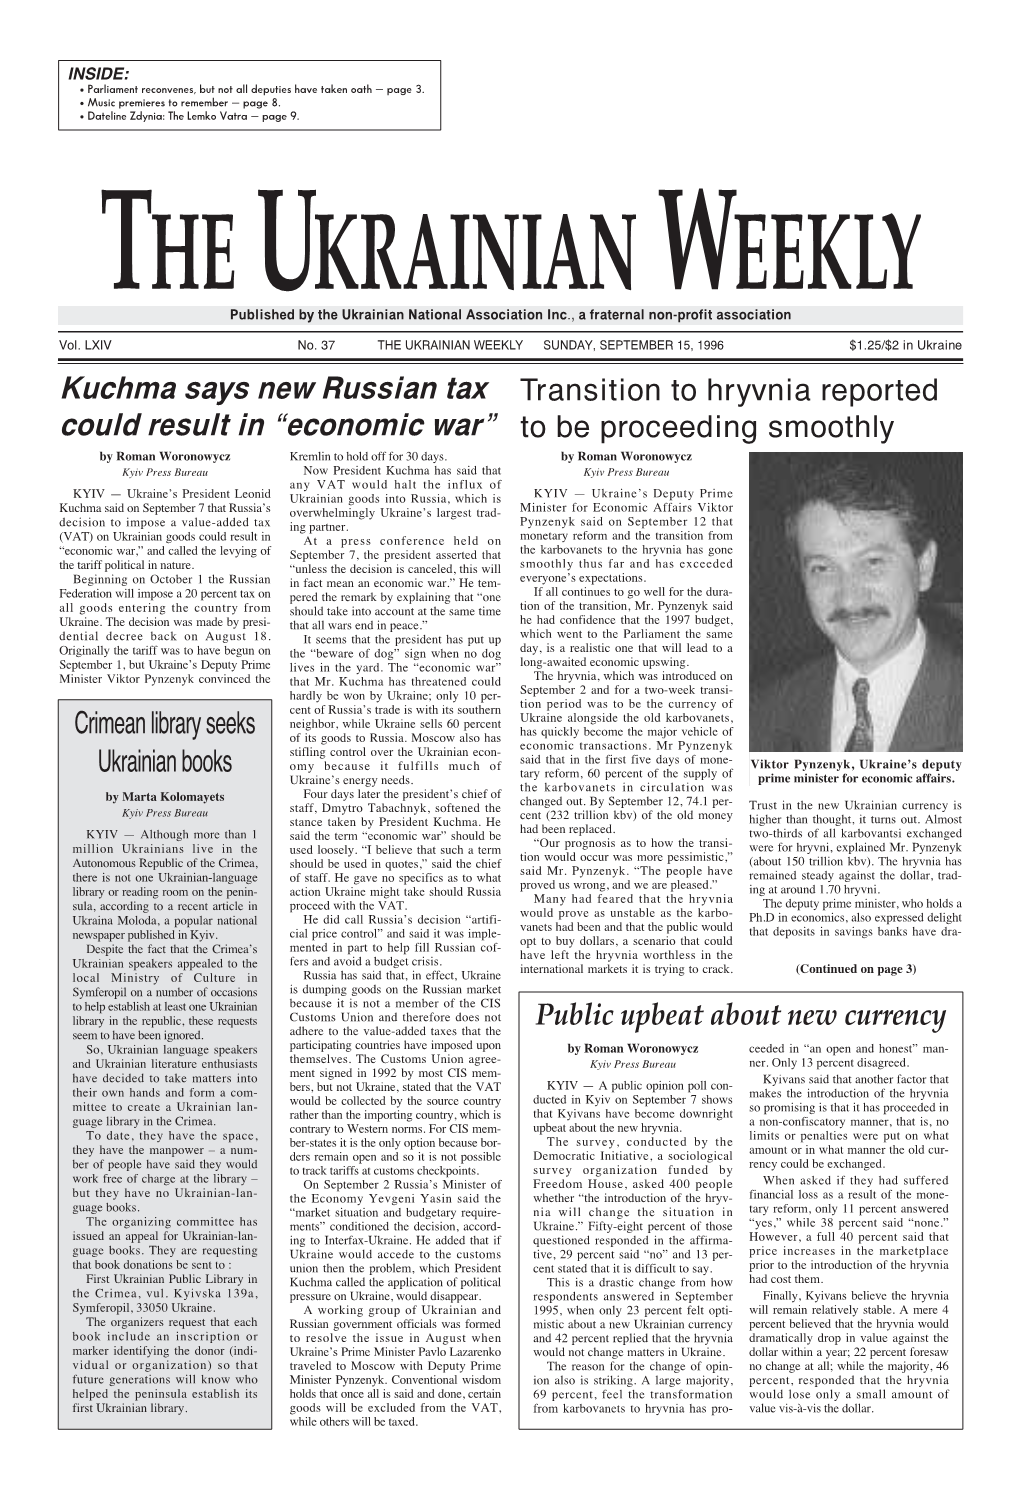 The Ukrainian Weekly 1996, No.37